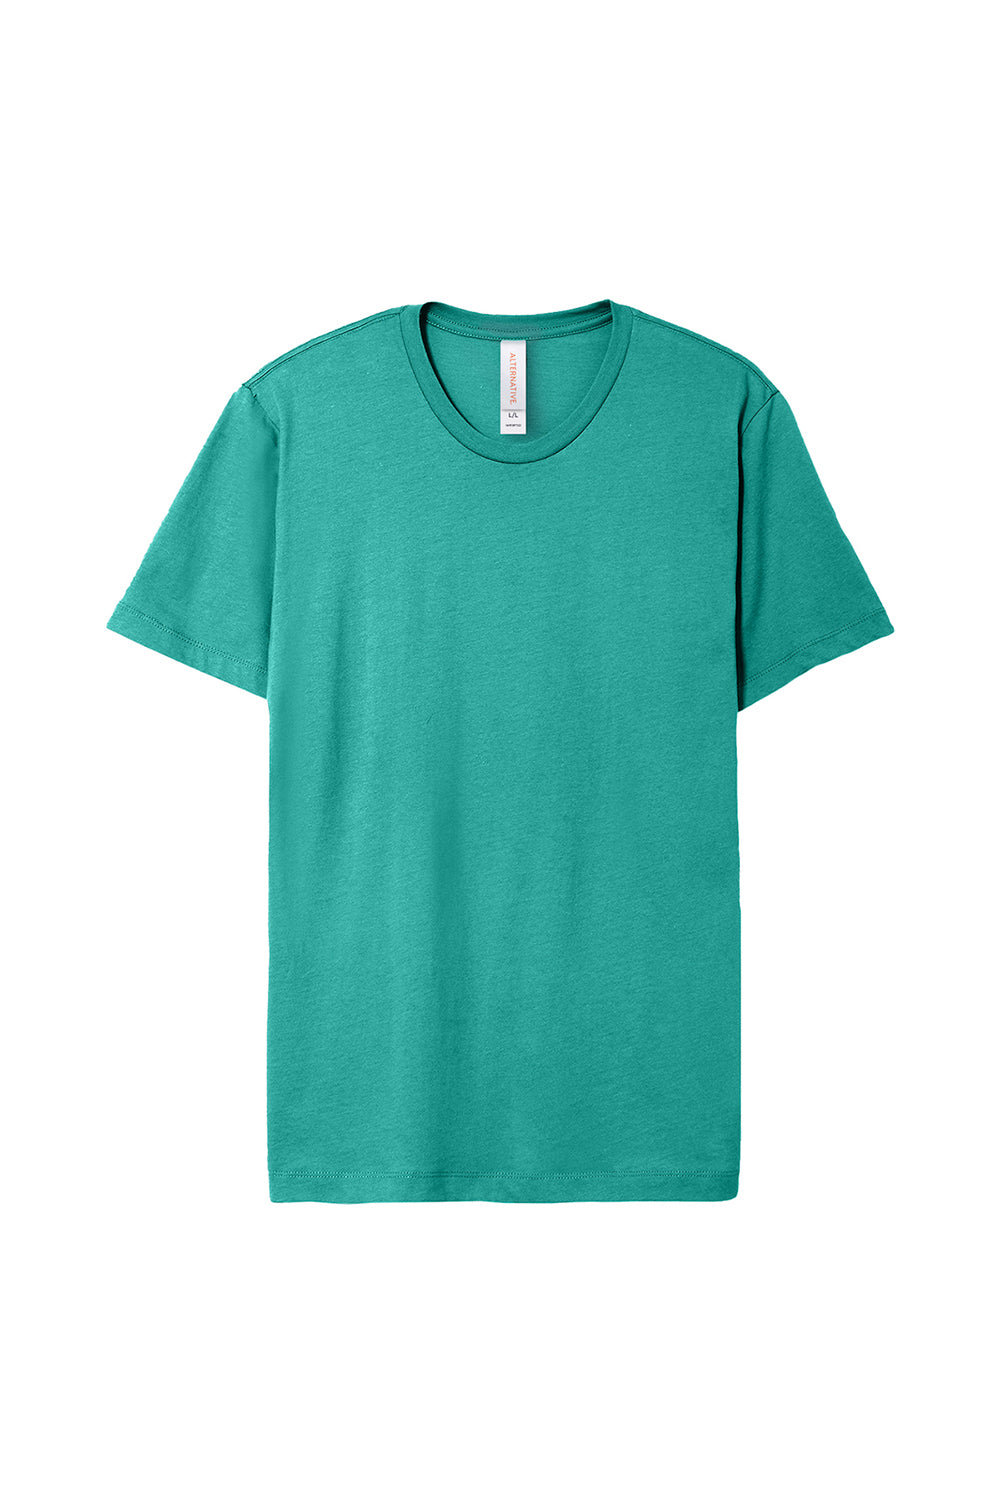 Alternative AA1070/1070 Mens Go To Jersey Short Sleeve Crewneck T-Shirt Aqua Tonic Green Flat Front